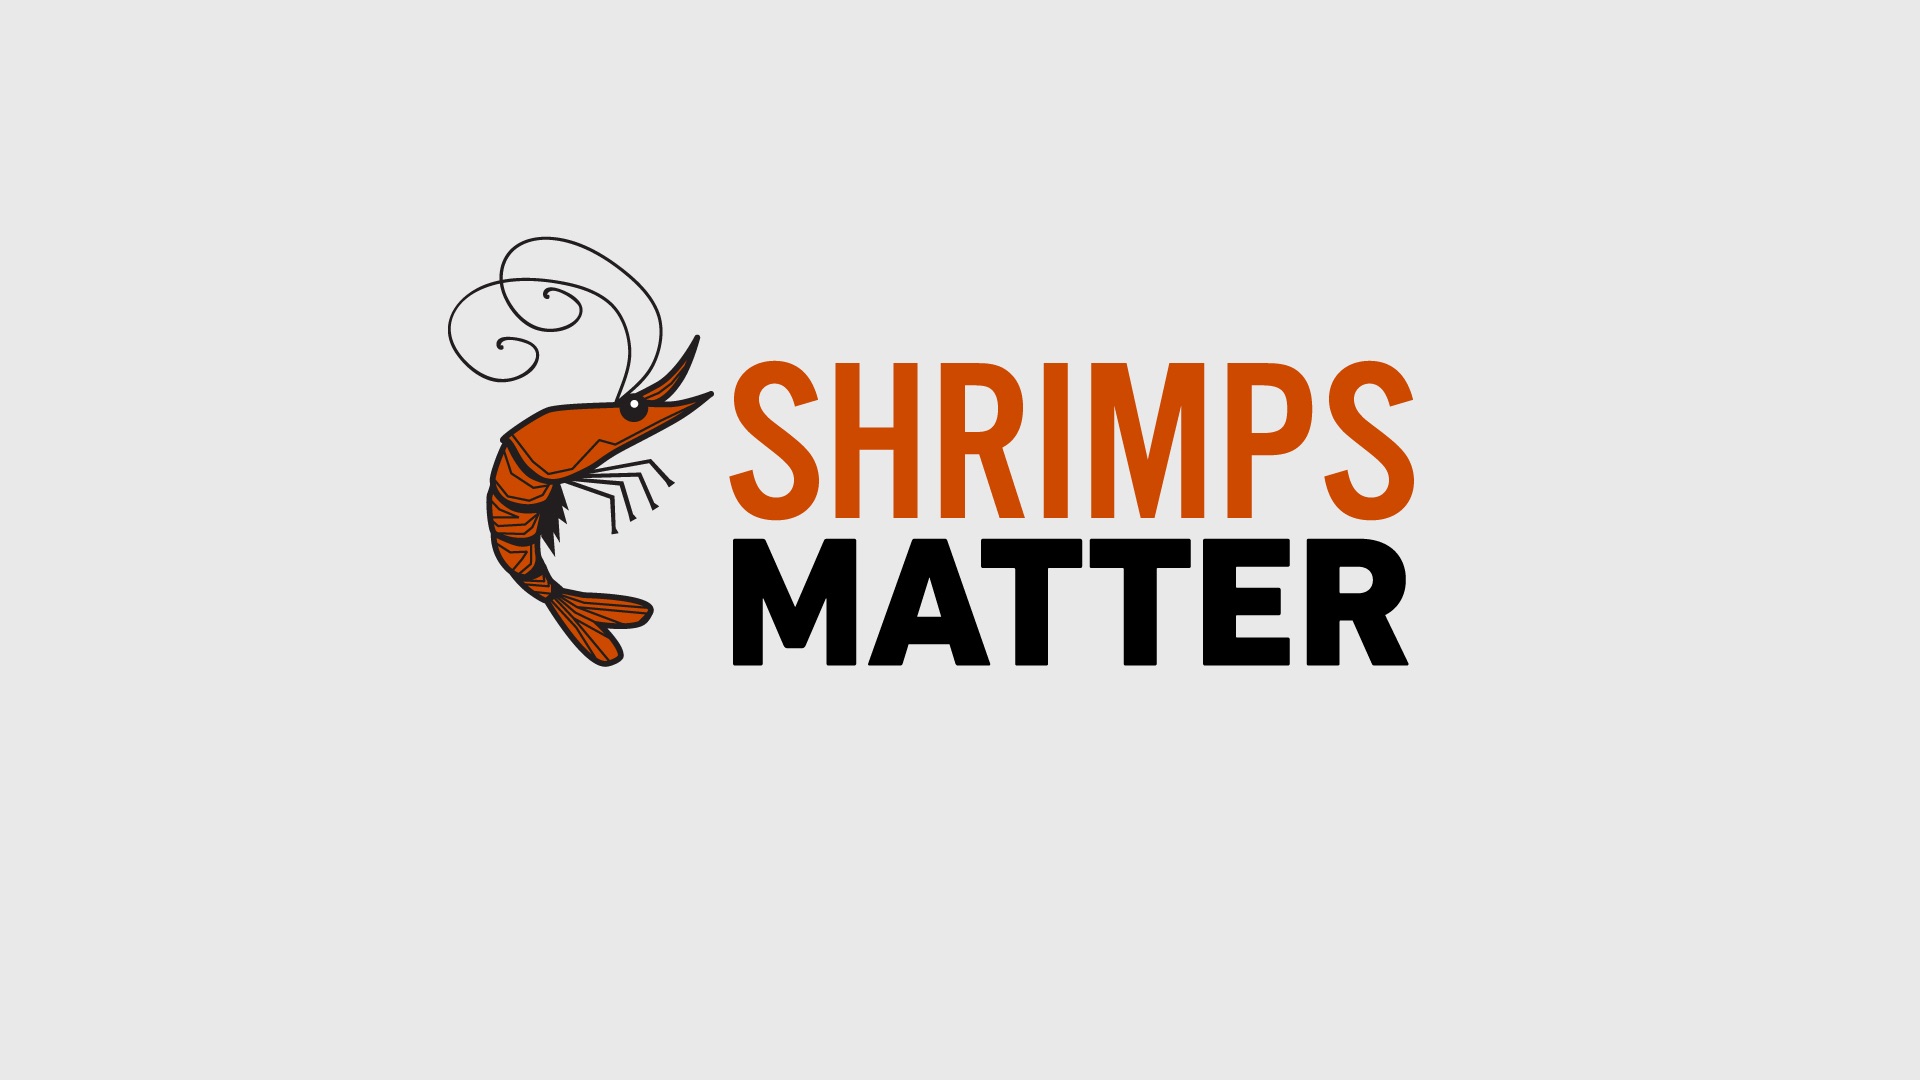 Shrimps matter gallery 3